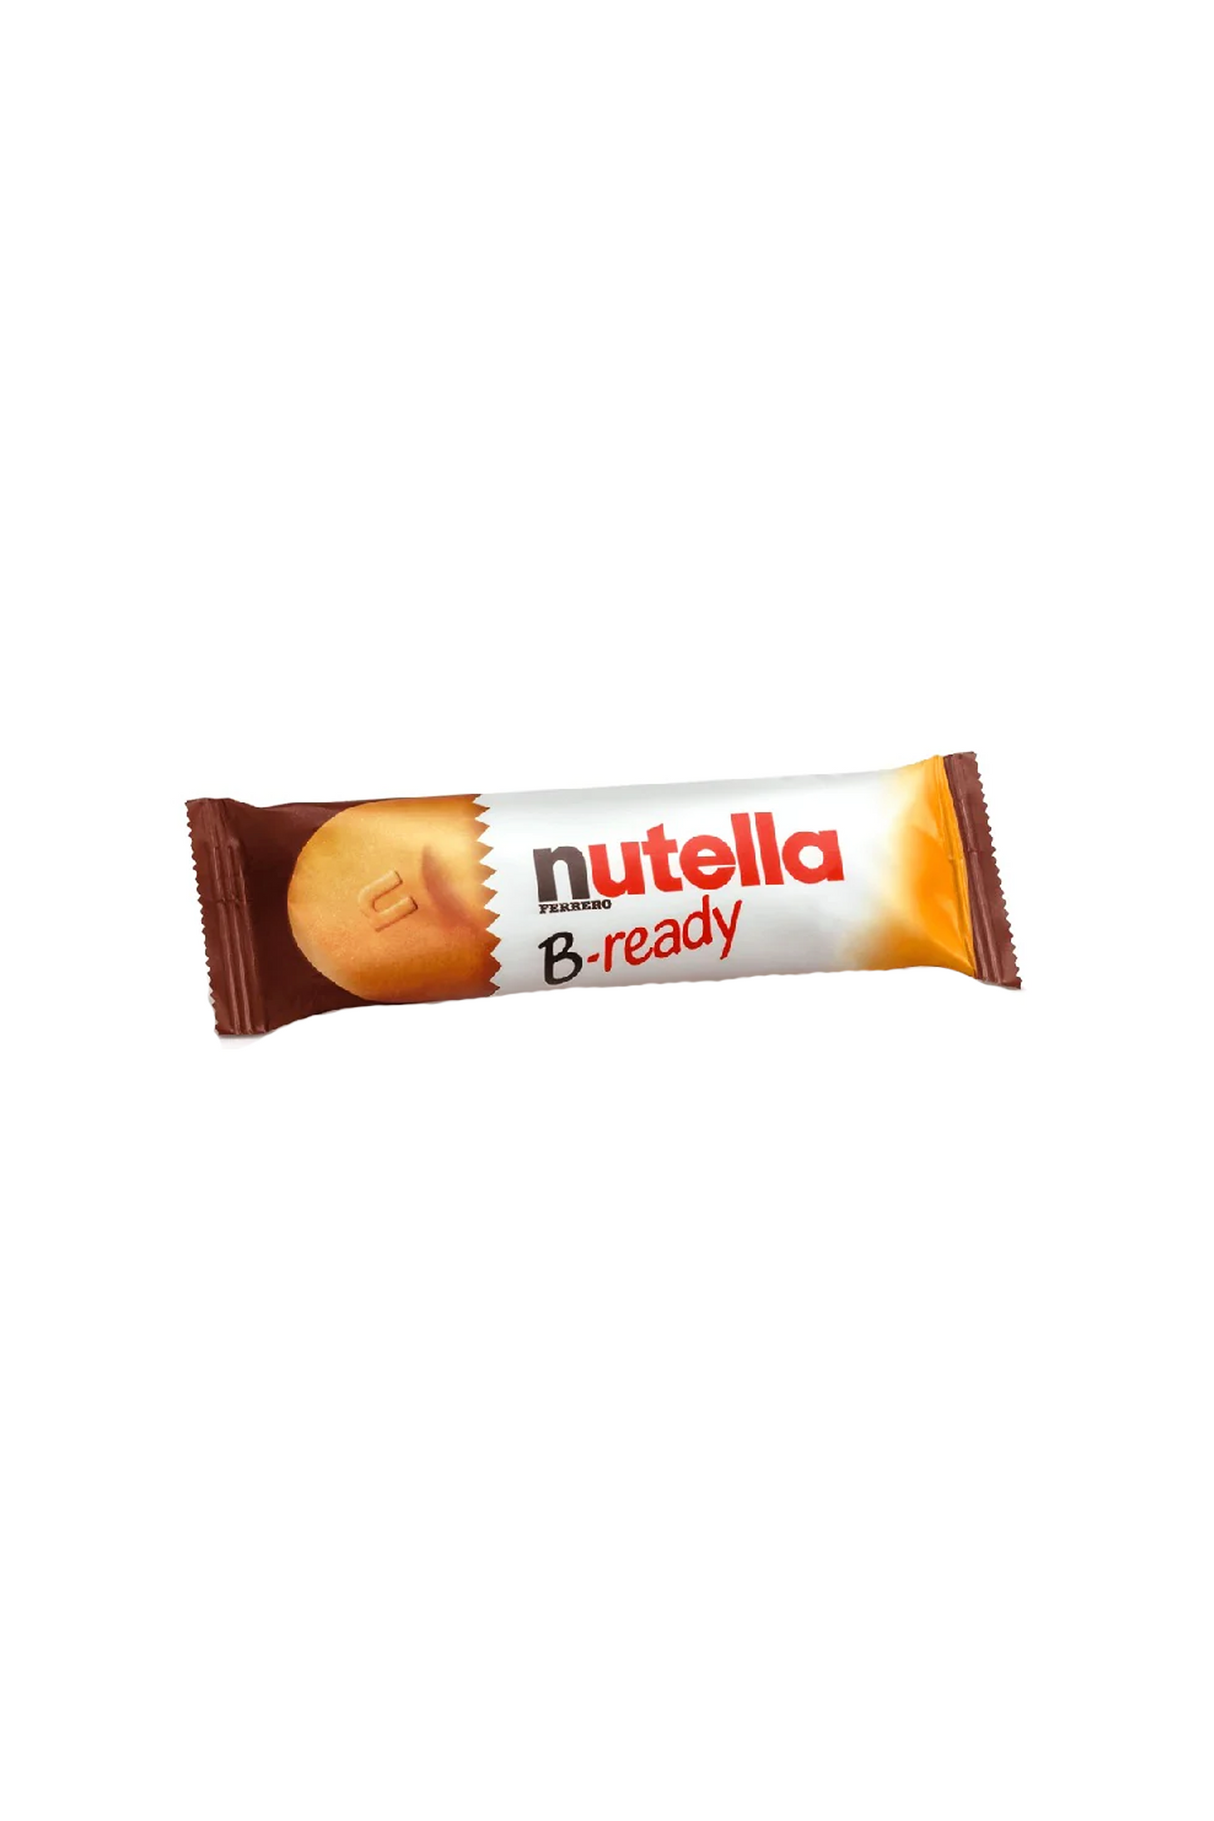 nutella chocolate b ready 22g